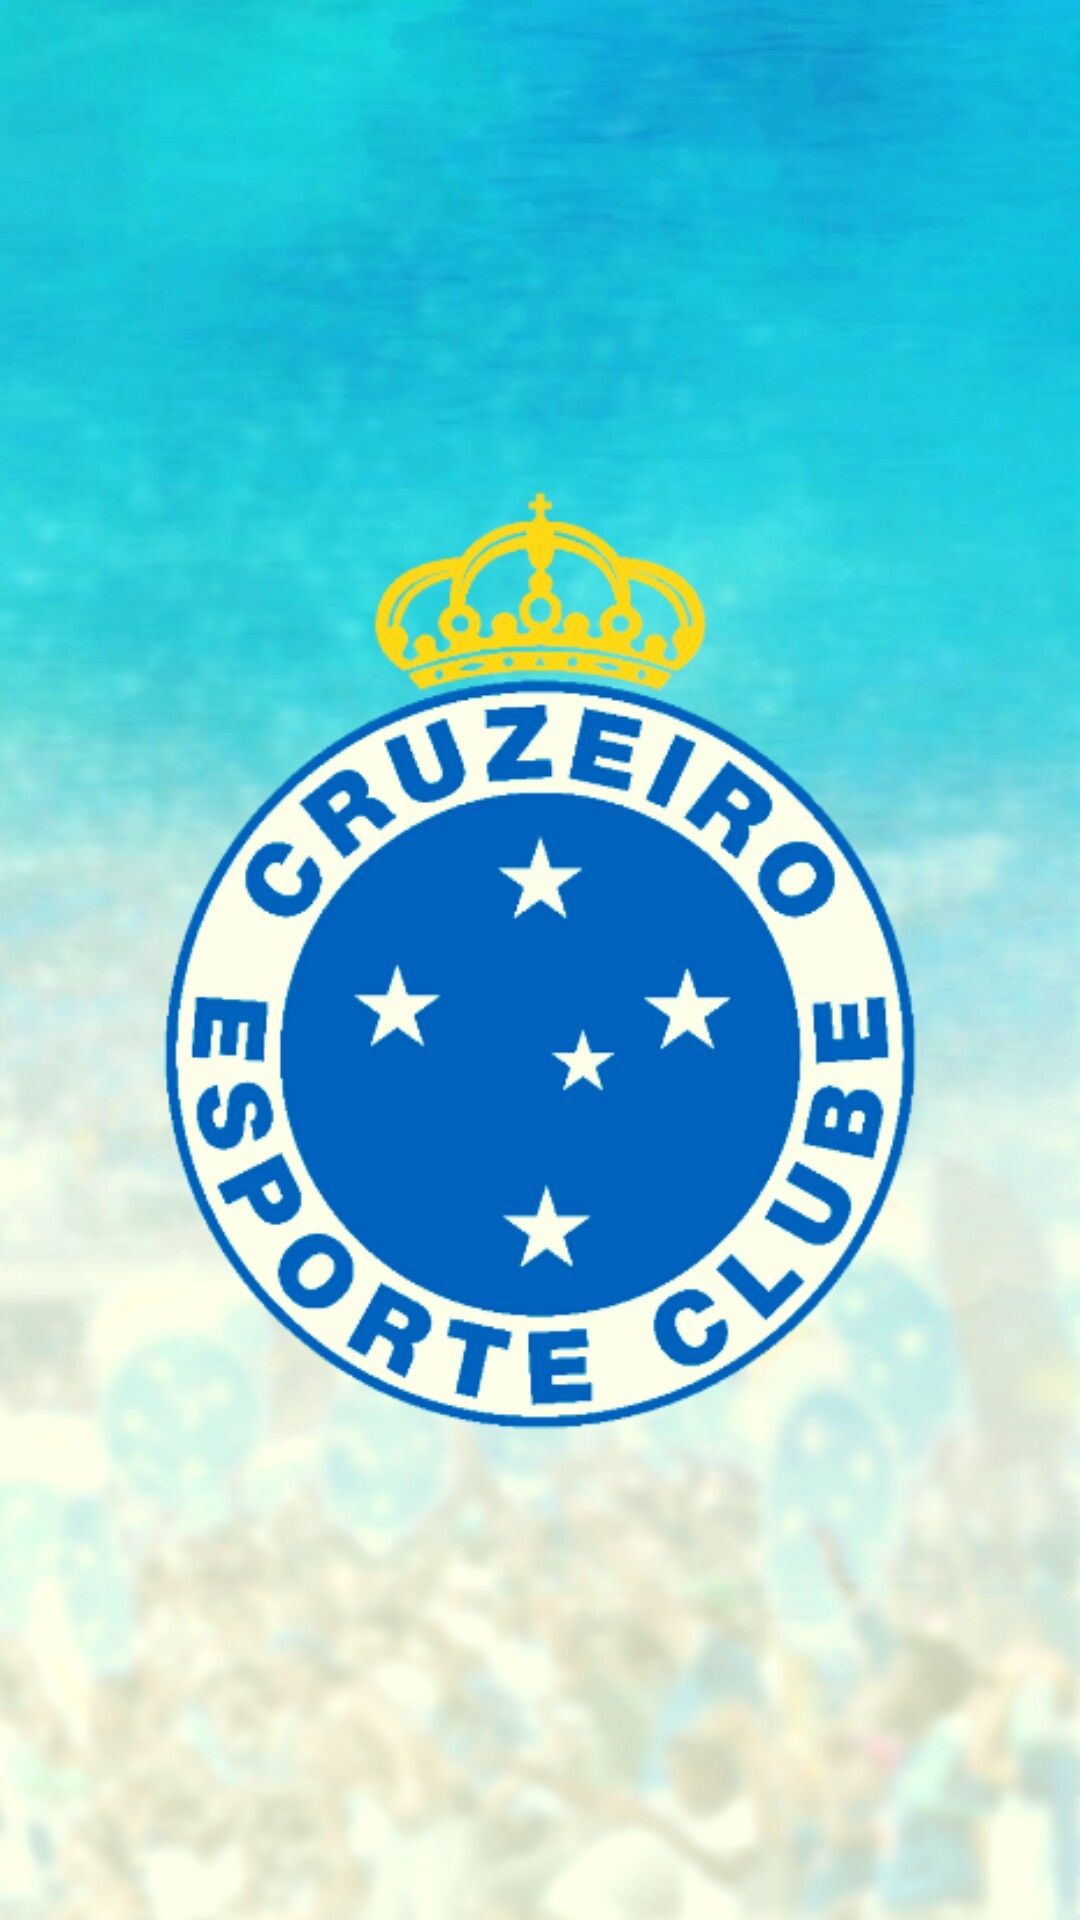 Wallpaper Cruzeiro Feito Por Otoniel Roberth